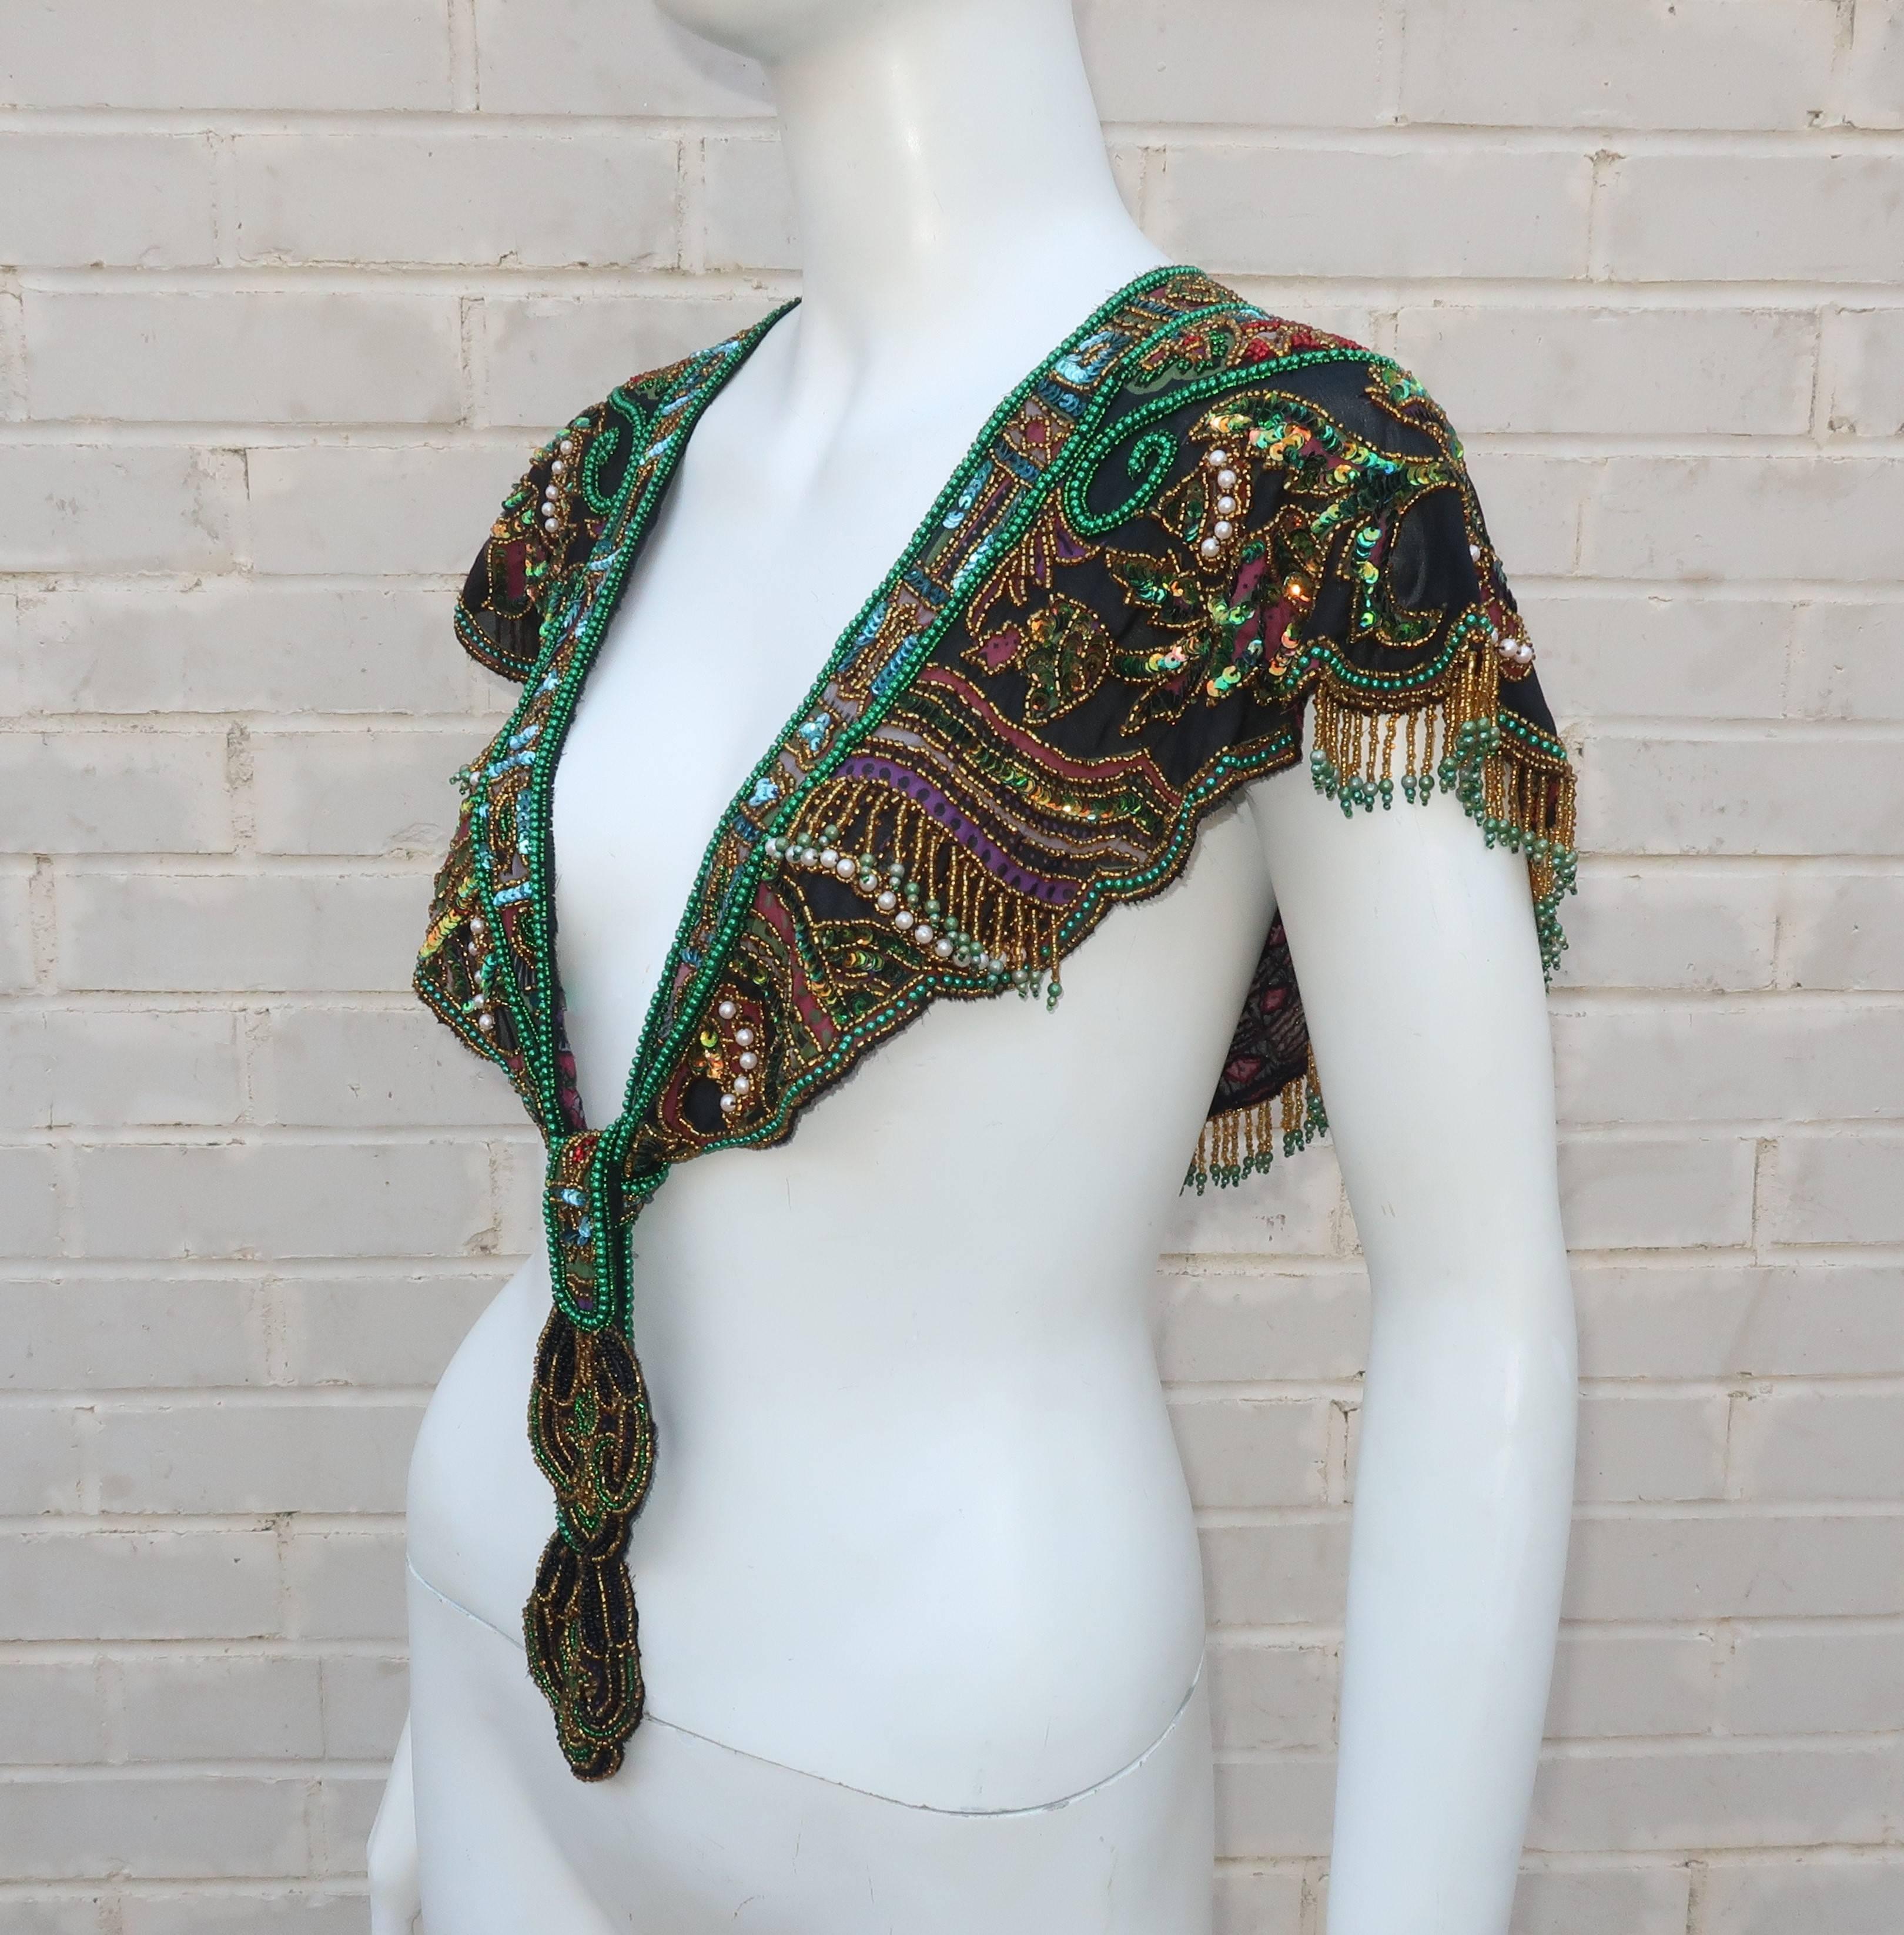 Women's 1970's Egyptian Revival Style Beaded & Fringed Bohemian Bib Collar